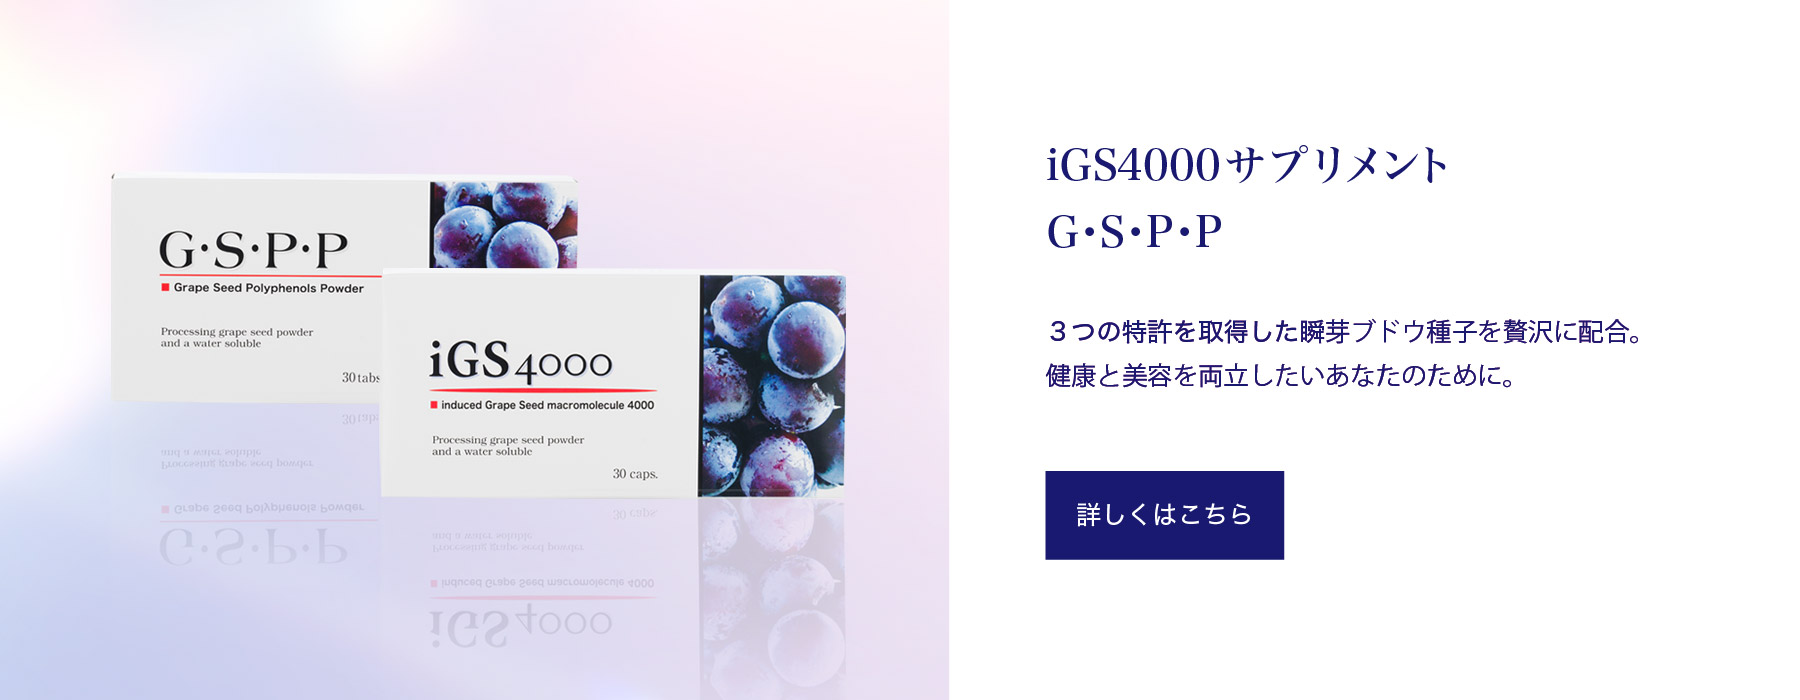 iGS4000サプリメント、G・S・P・P